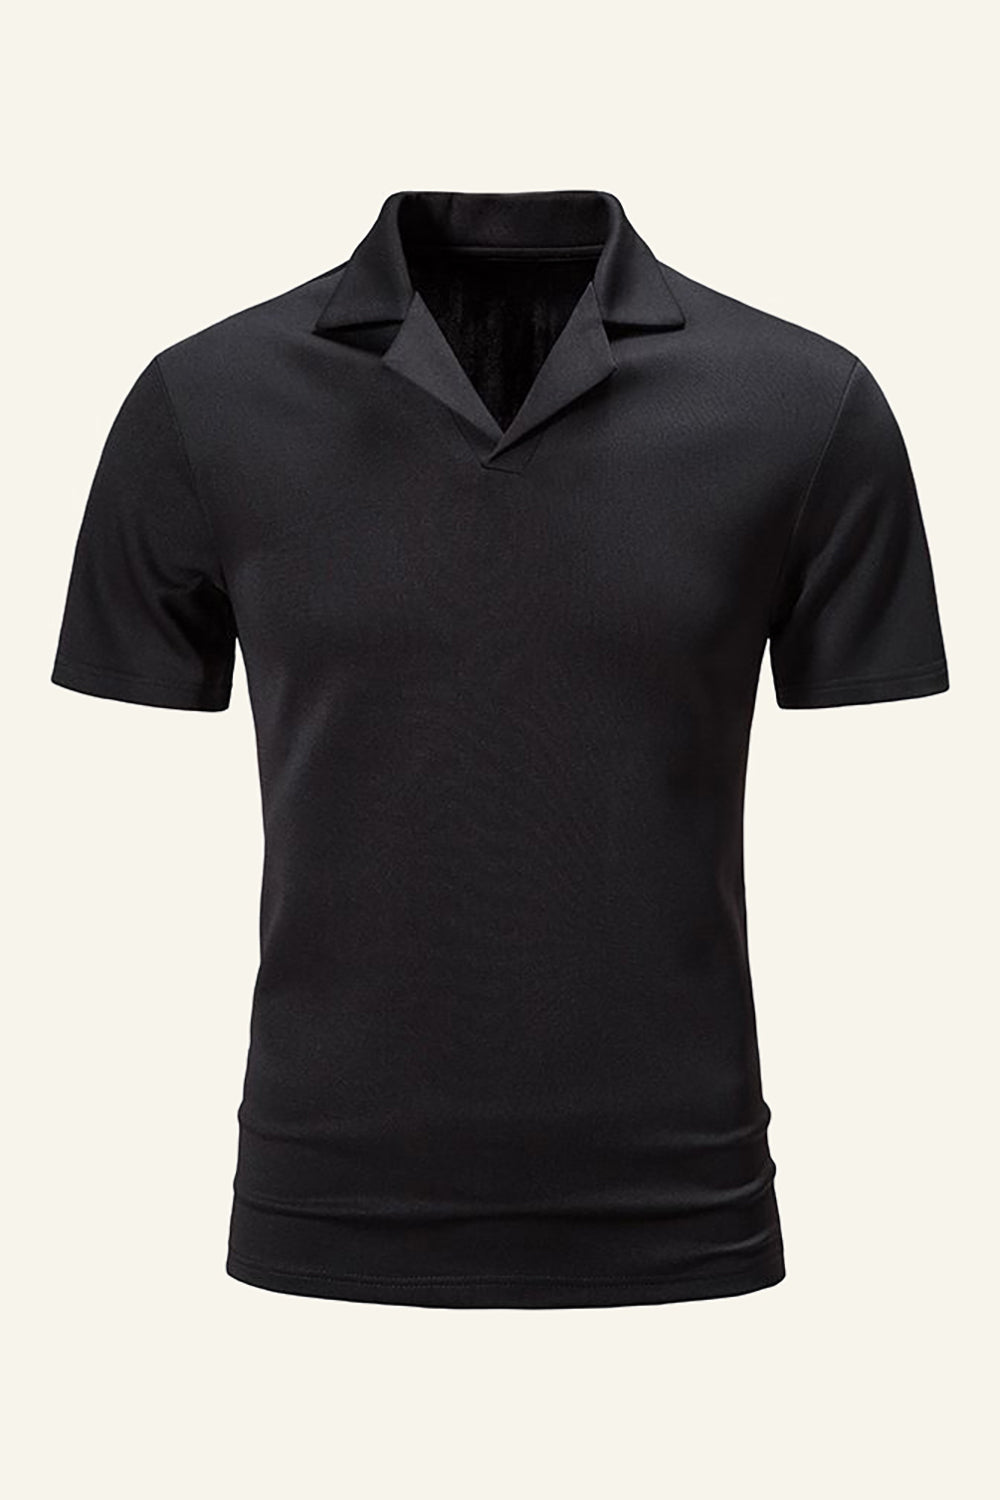 Slim Fit V Neck Short Sleeves Black Men Polo Shirt